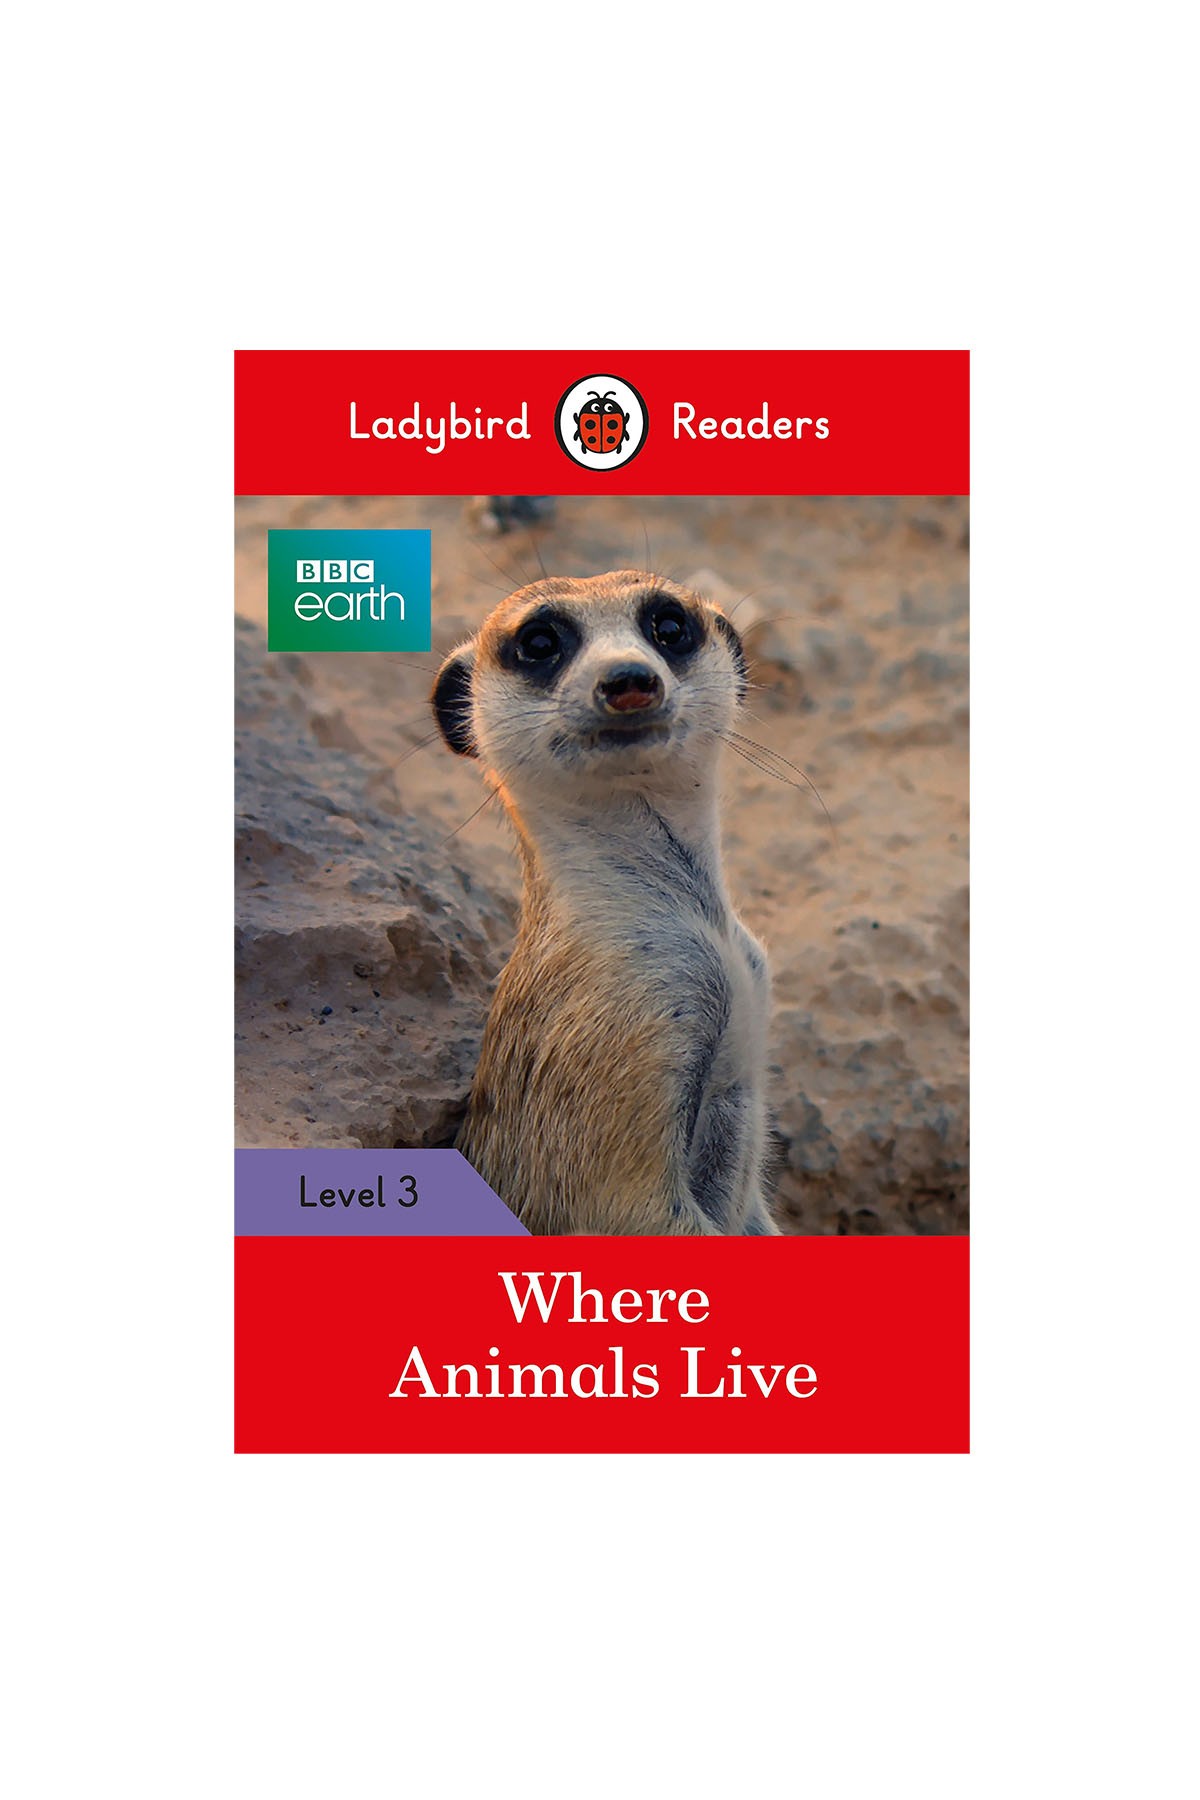 Ladybird - C Earth: Where Animals Live